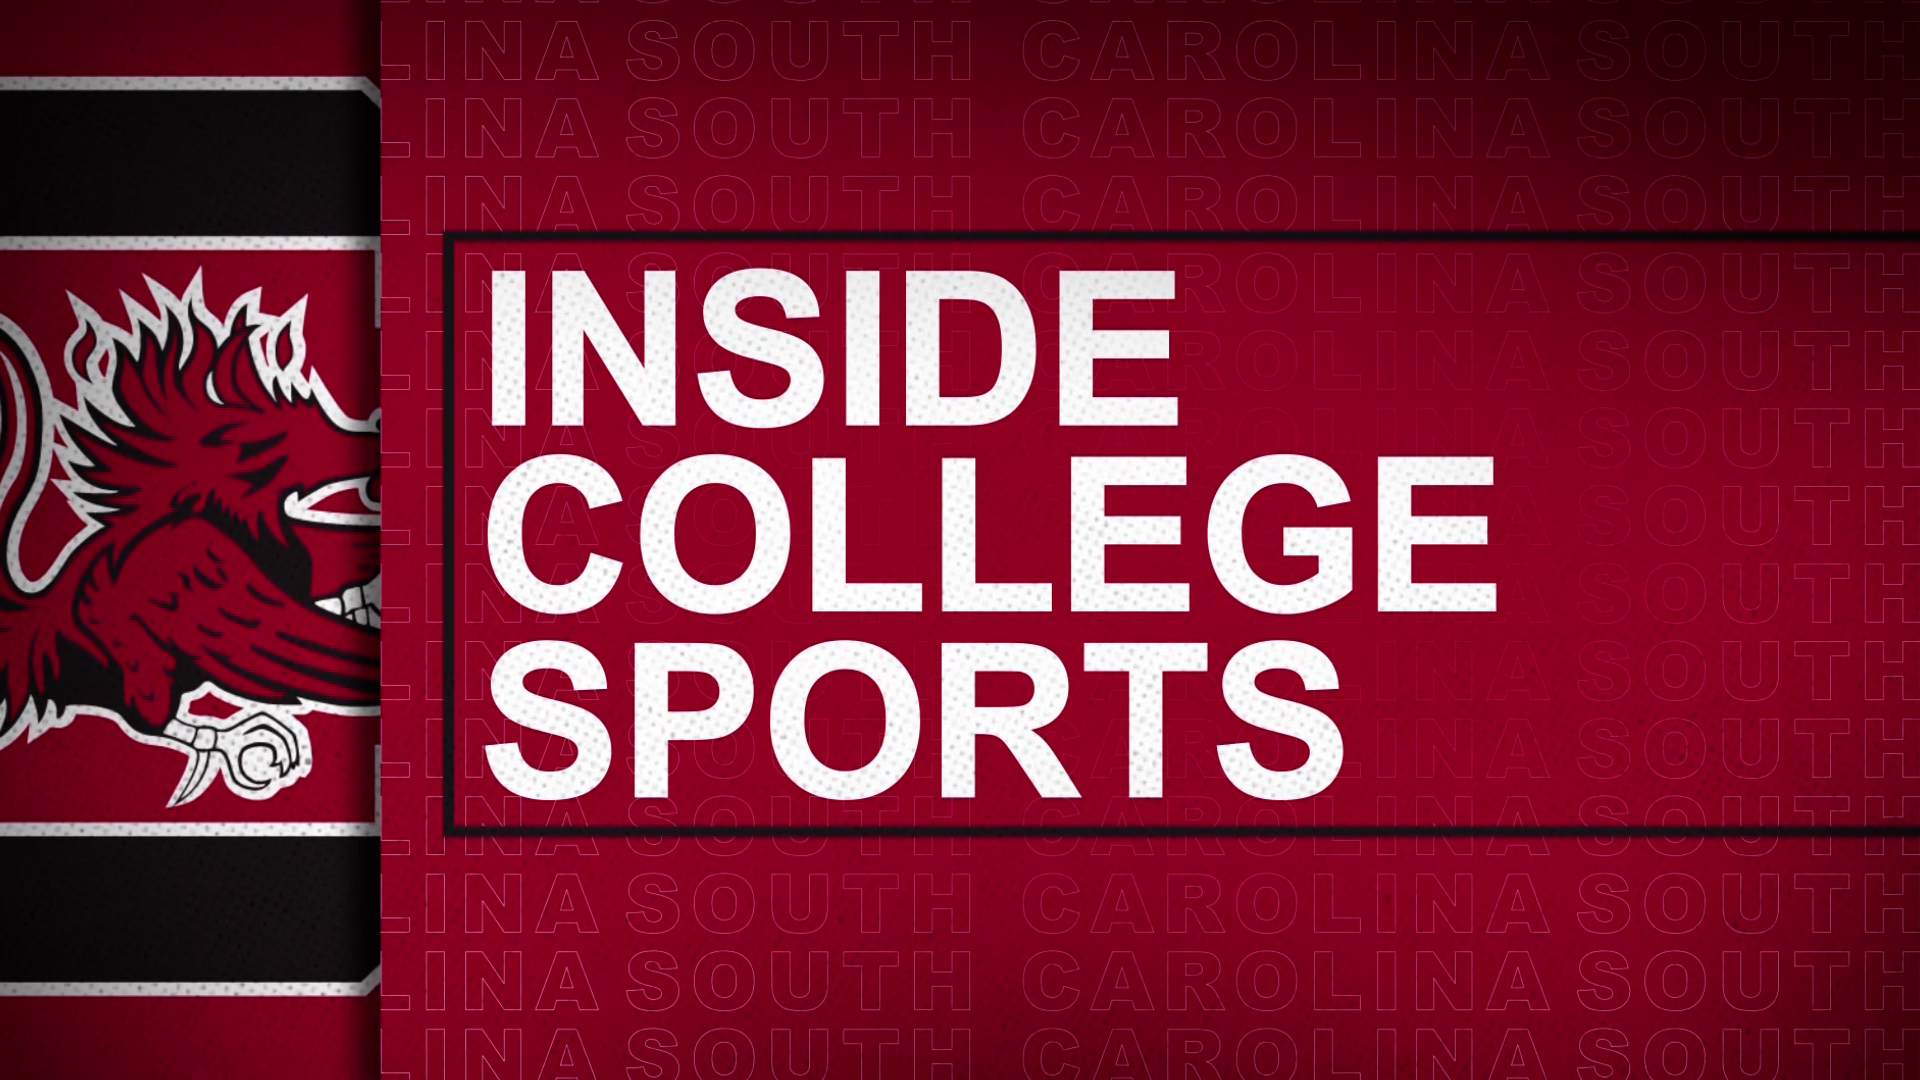 VIDEO: Inside College Sports Vignette Series